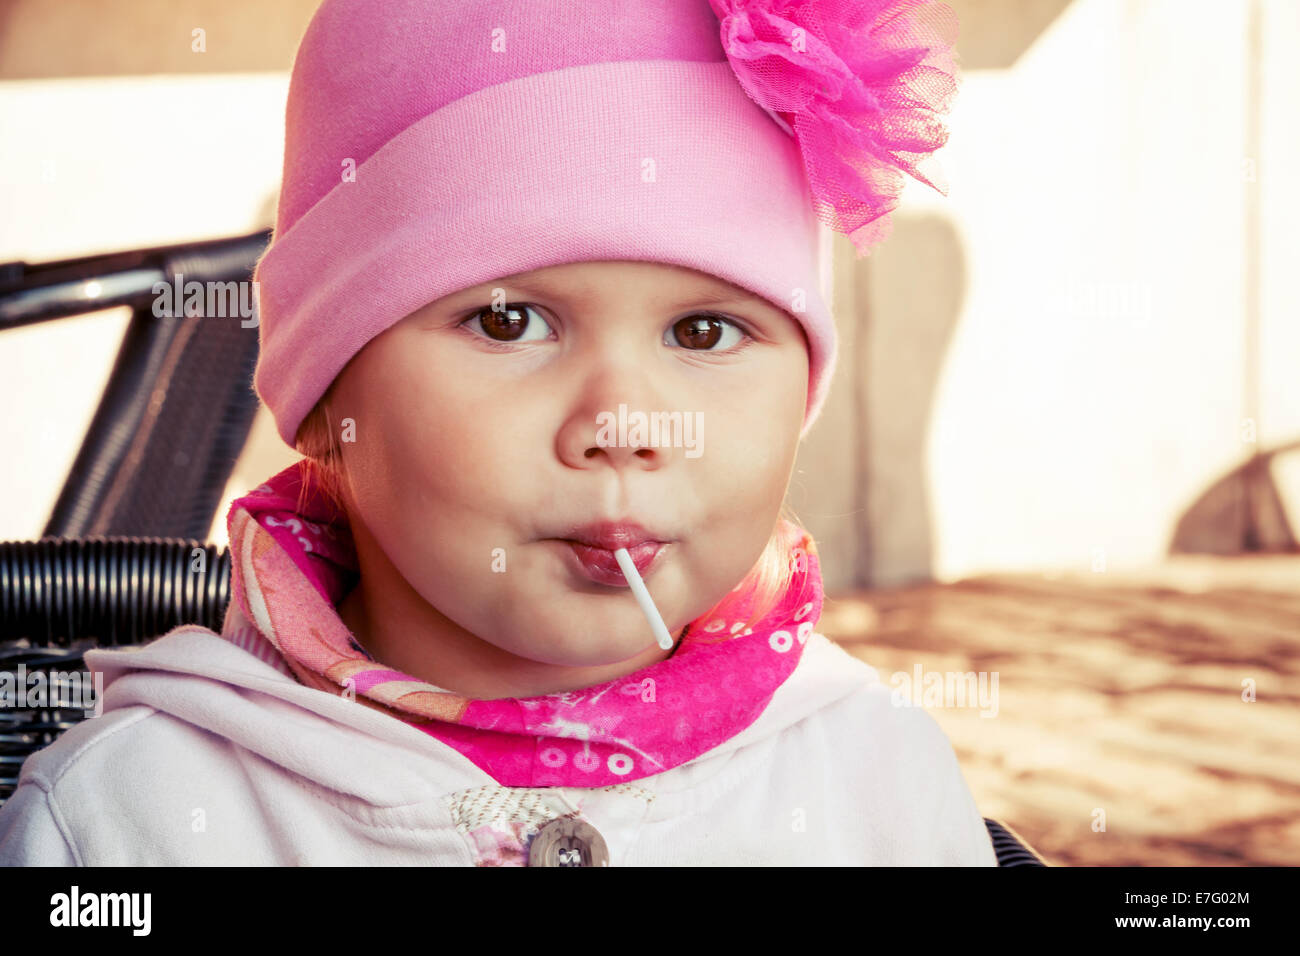 Closeup portrait of baby girl in pink eating lollipop Stock Photo